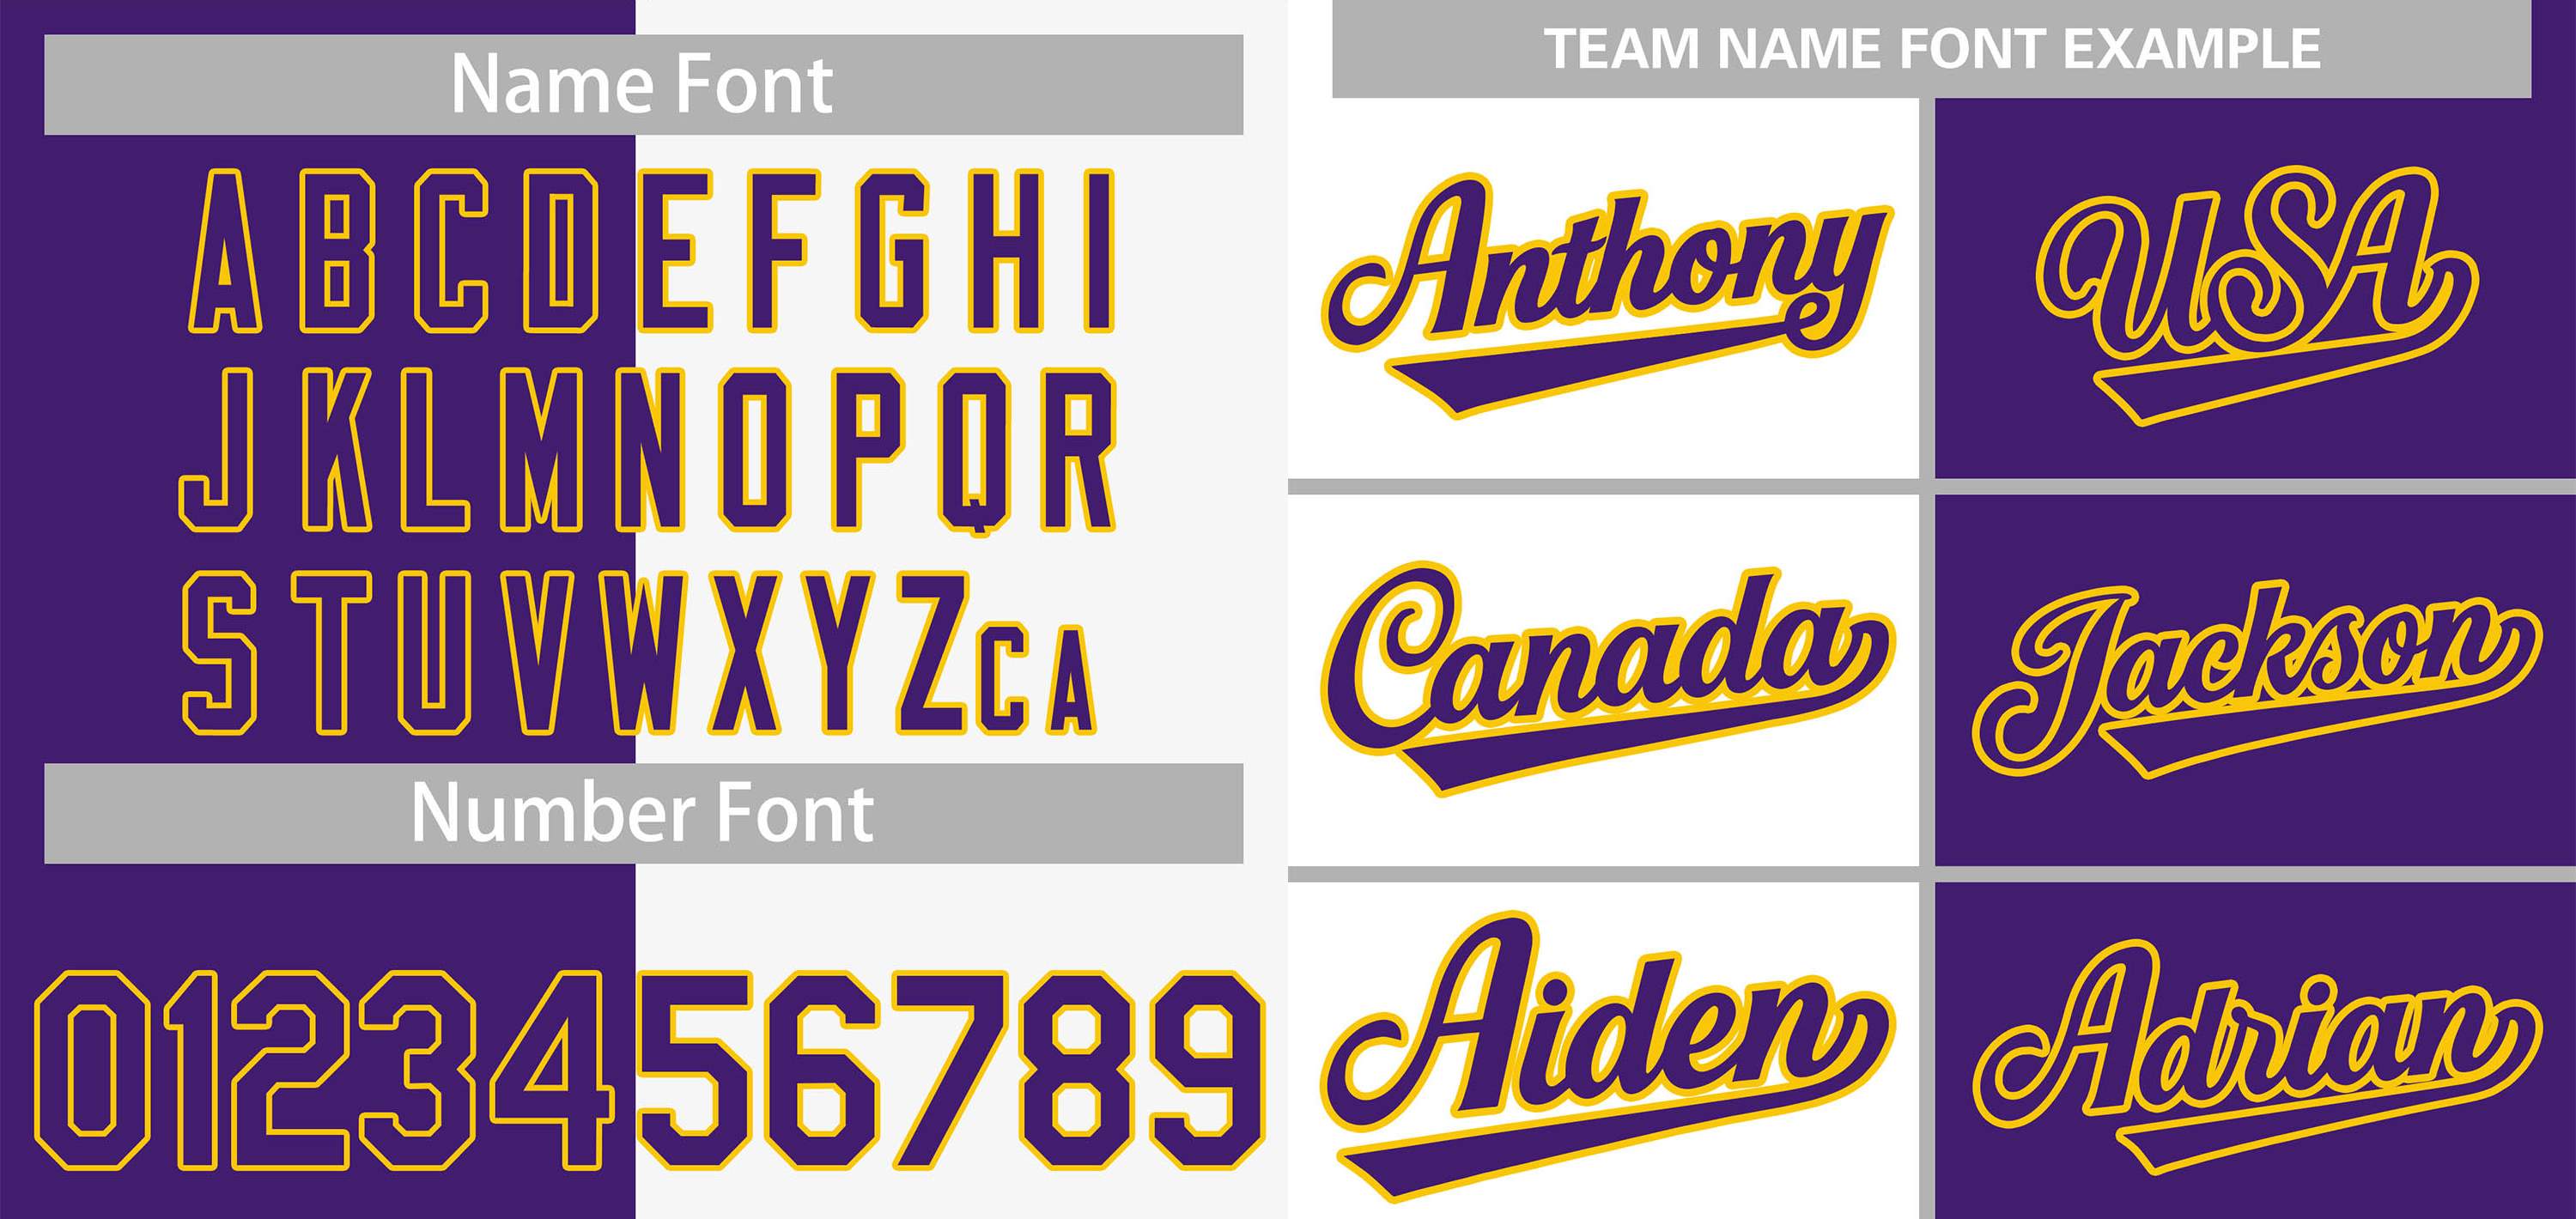 custom split jersey font